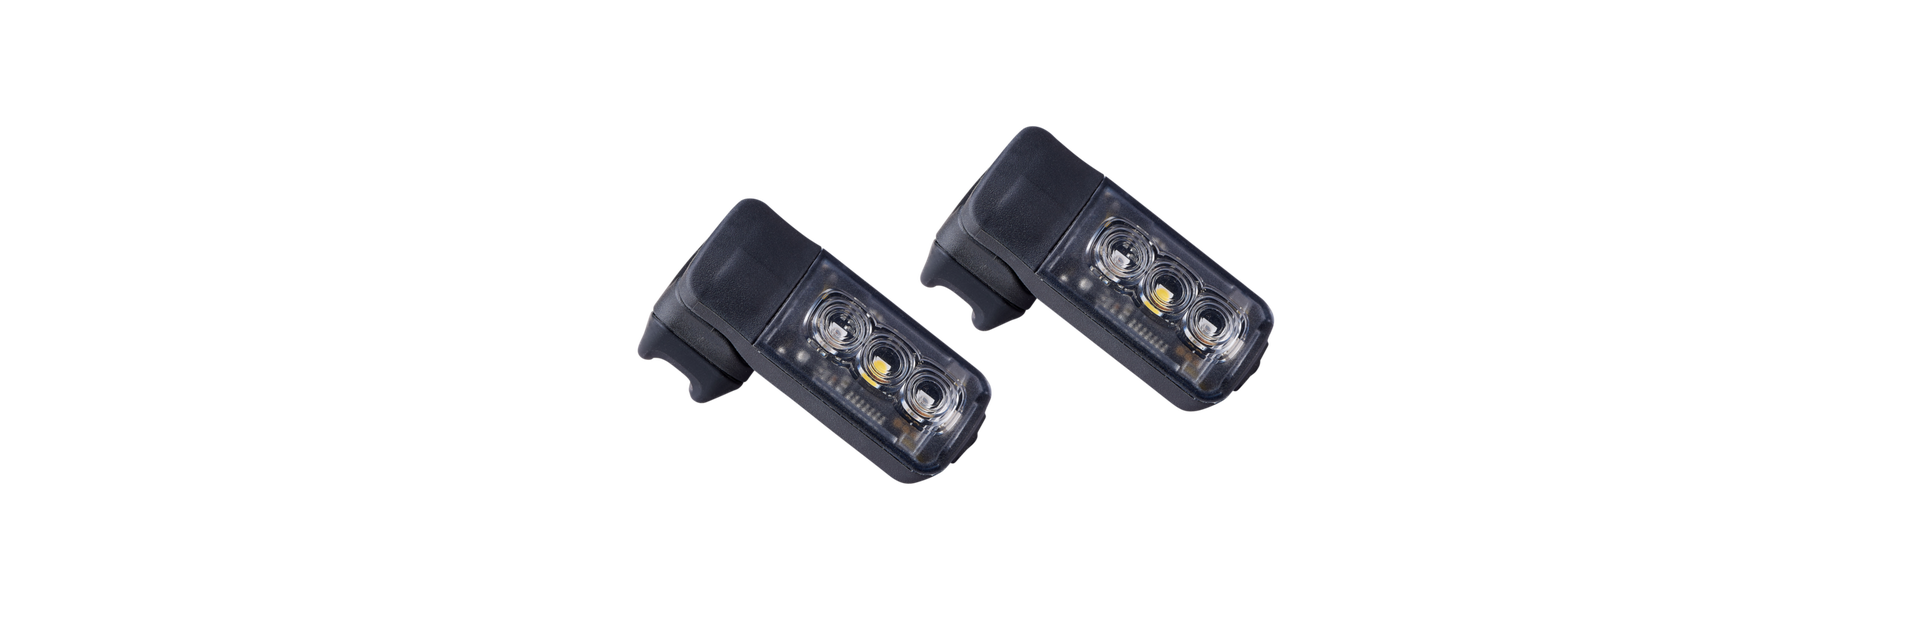 Specialized Stix Switch Headlight / Taillight 2 pack black